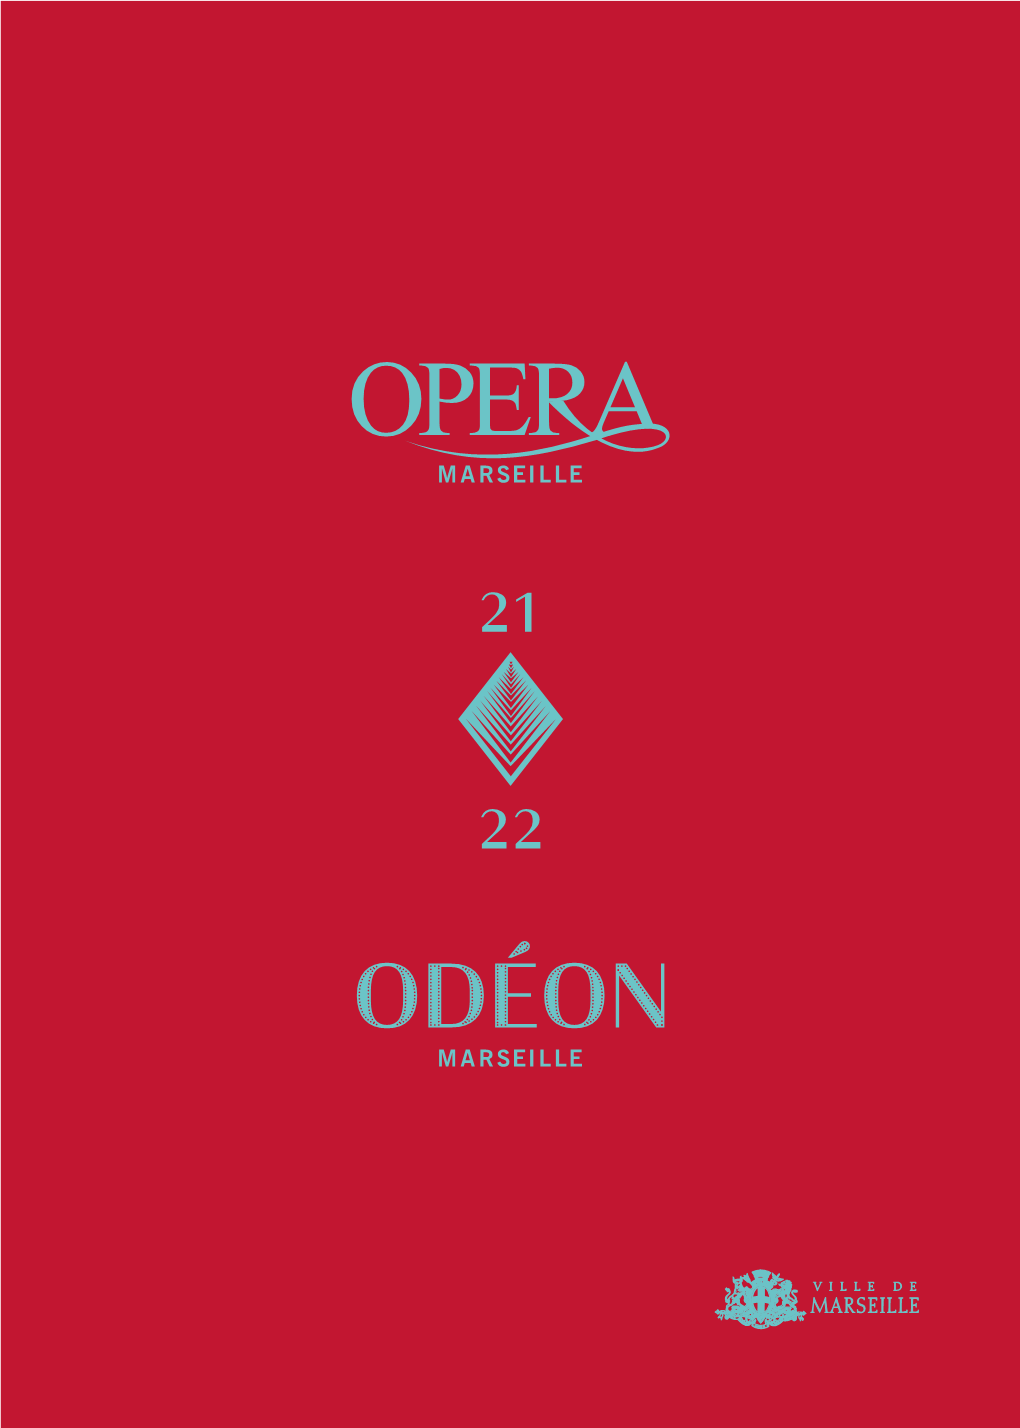 Mini-Brochure Opéra Et Odéon 2021/2022 (.Pdf)